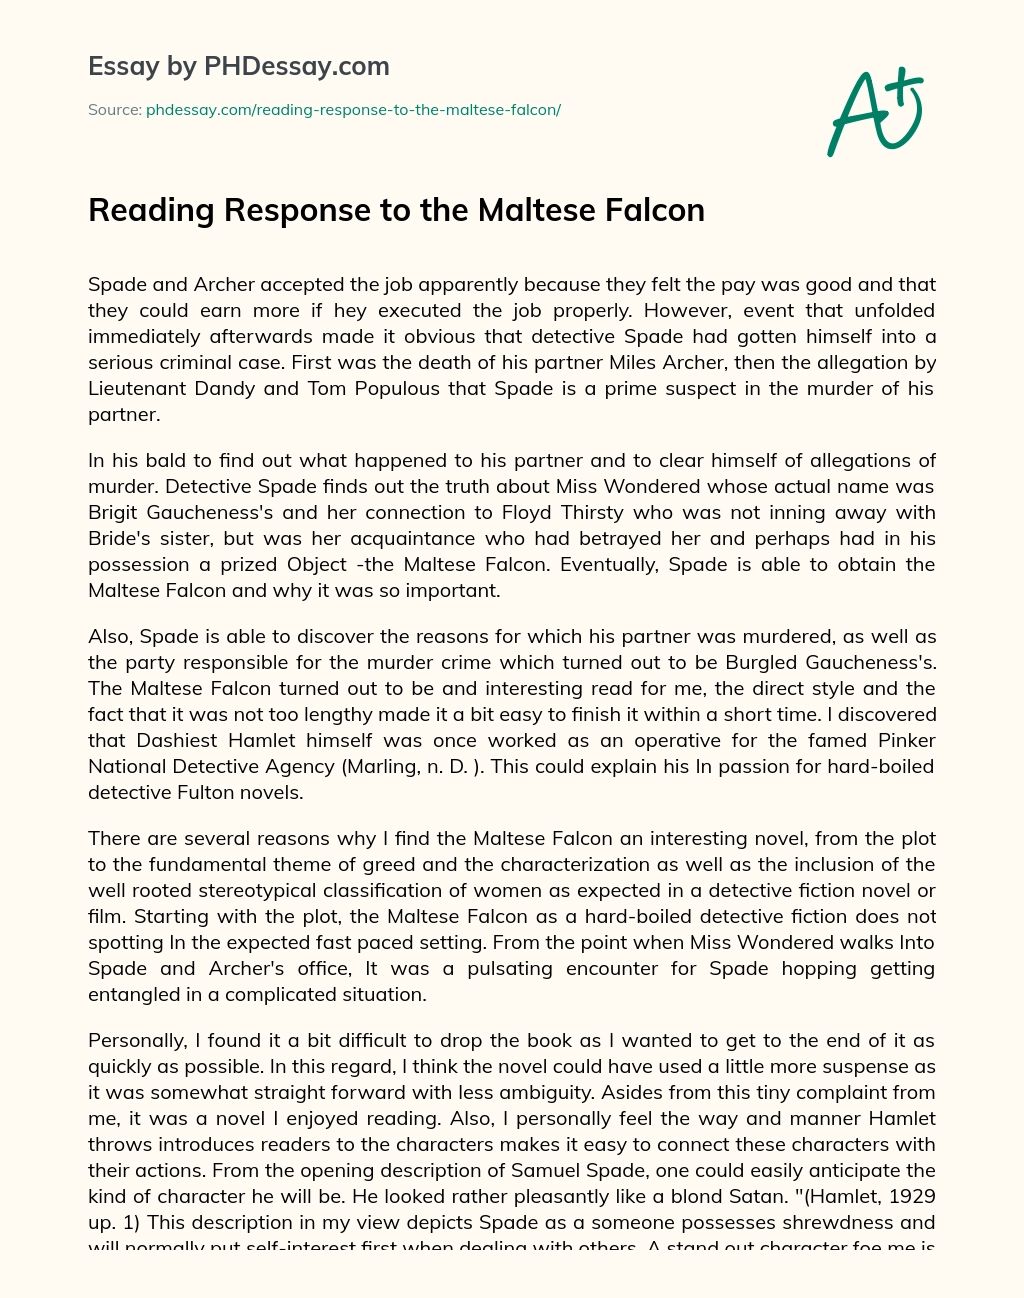 Reading Response to the Maltese Falcon essay